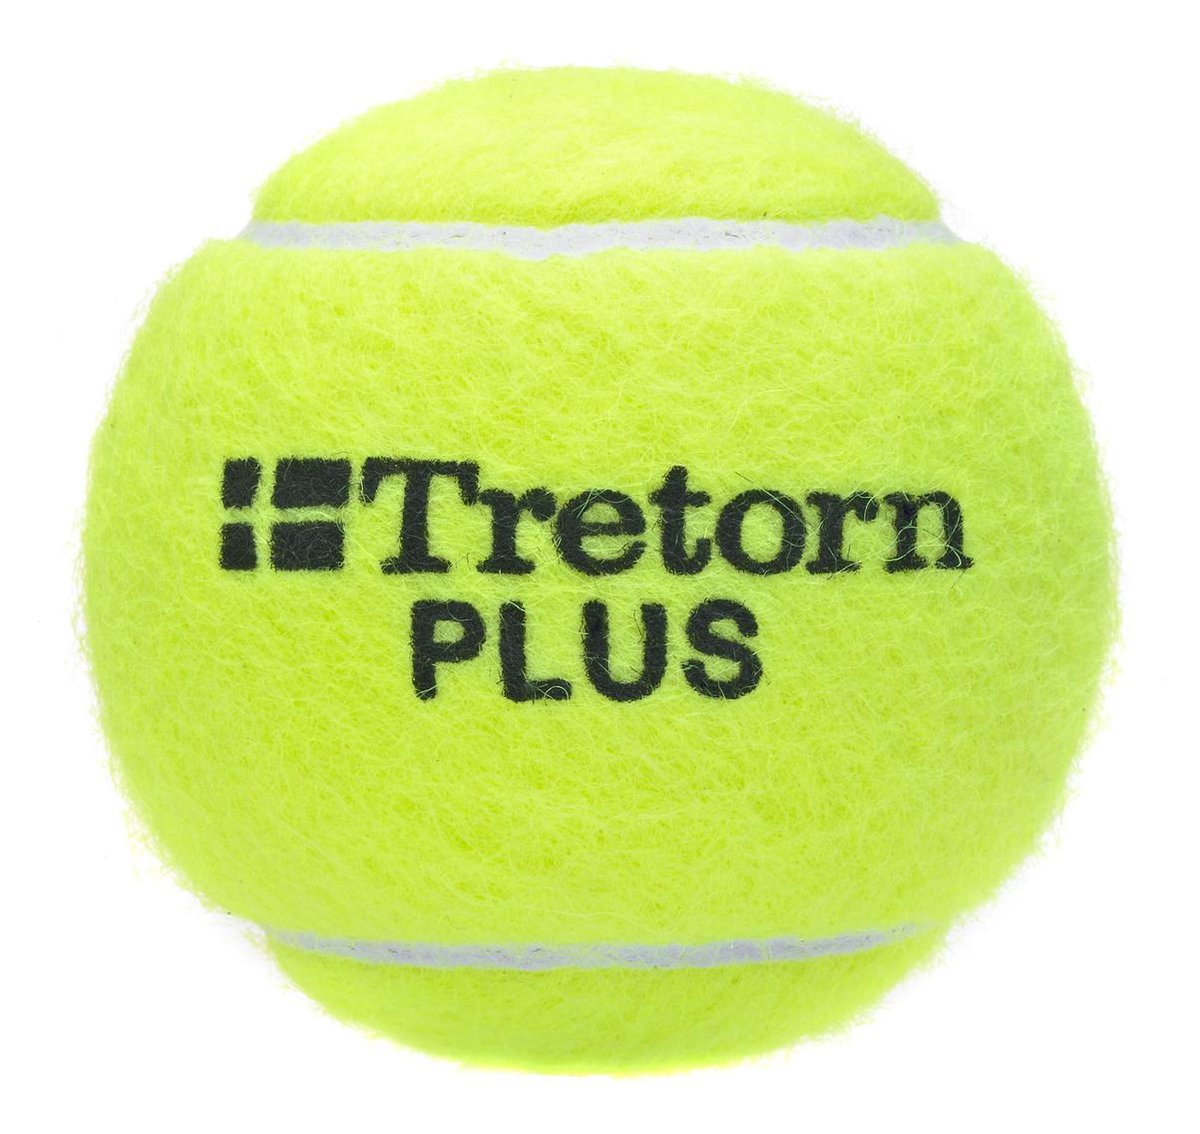 Tretorn Plus Tennisballen - 4 ballen | bol